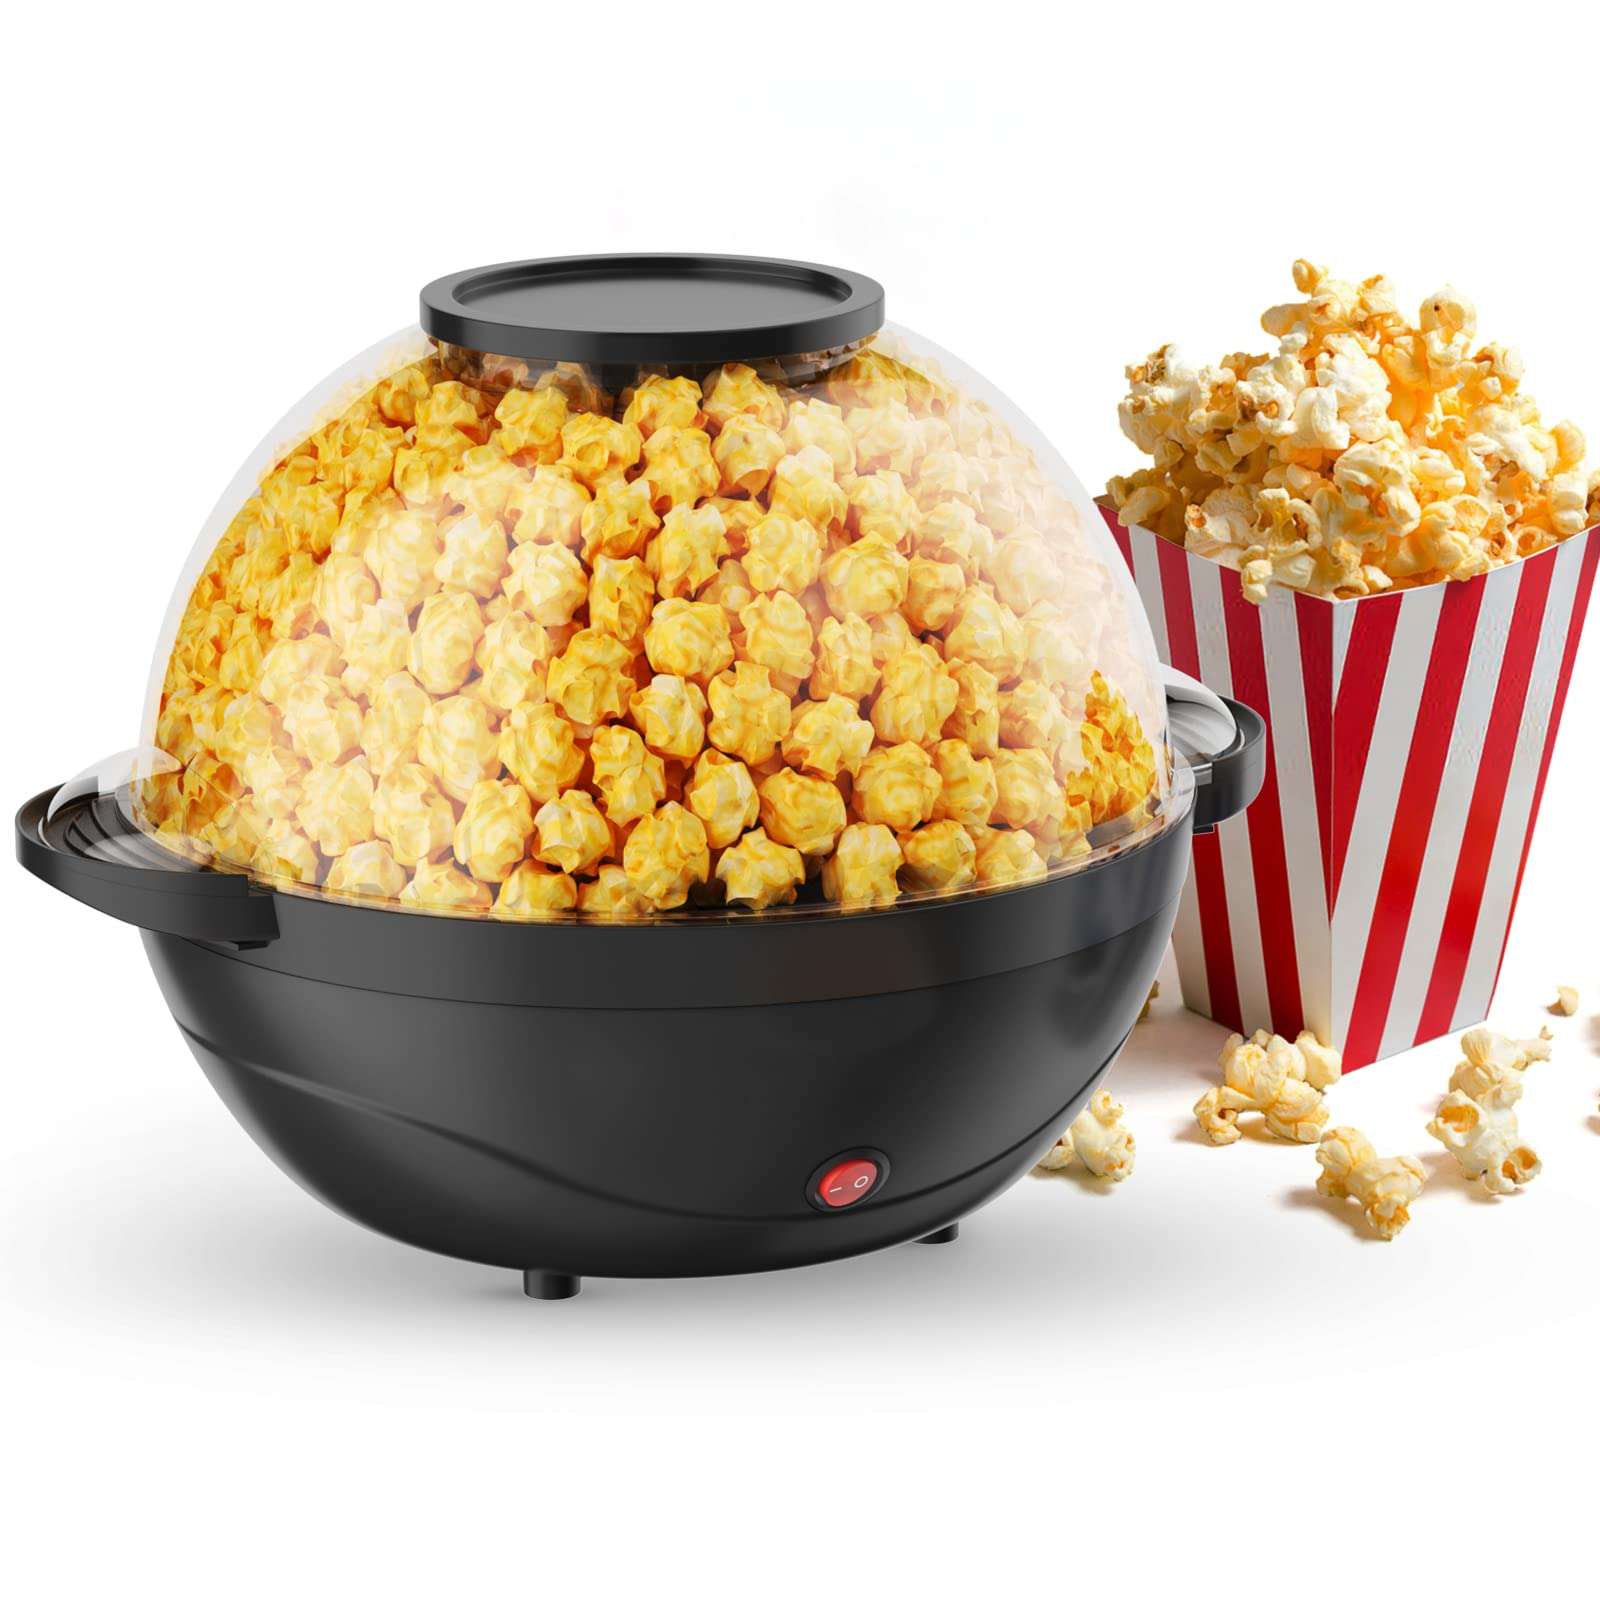 Giantex Popcorn Popper Machine, 6 Quarts/24 Cups Electric Popcorn Maker with Nonstick Plate